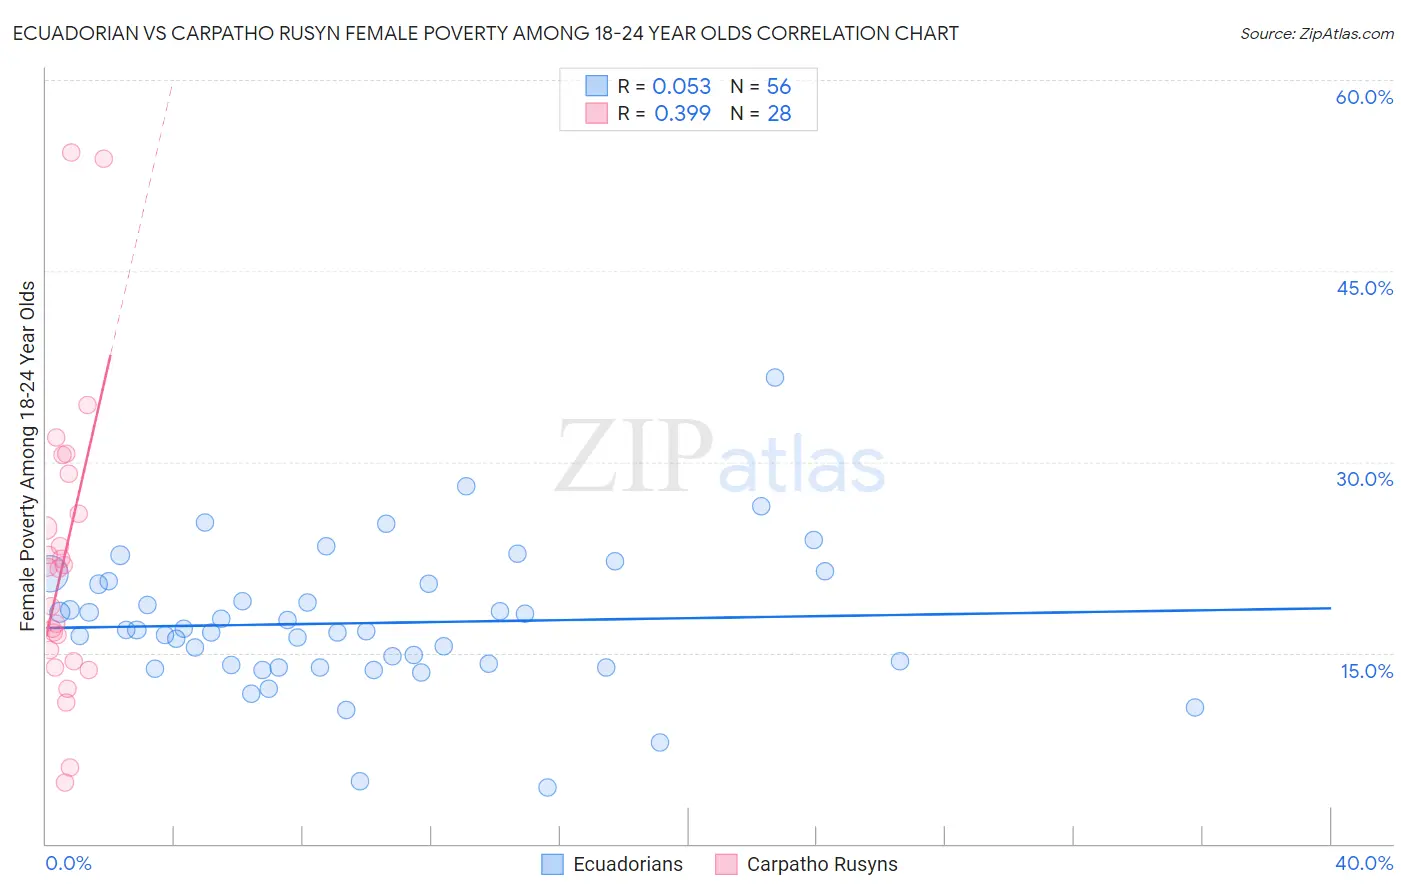 Ecuadorian vs Carpatho Rusyn Female Poverty Among 18-24 Year Olds